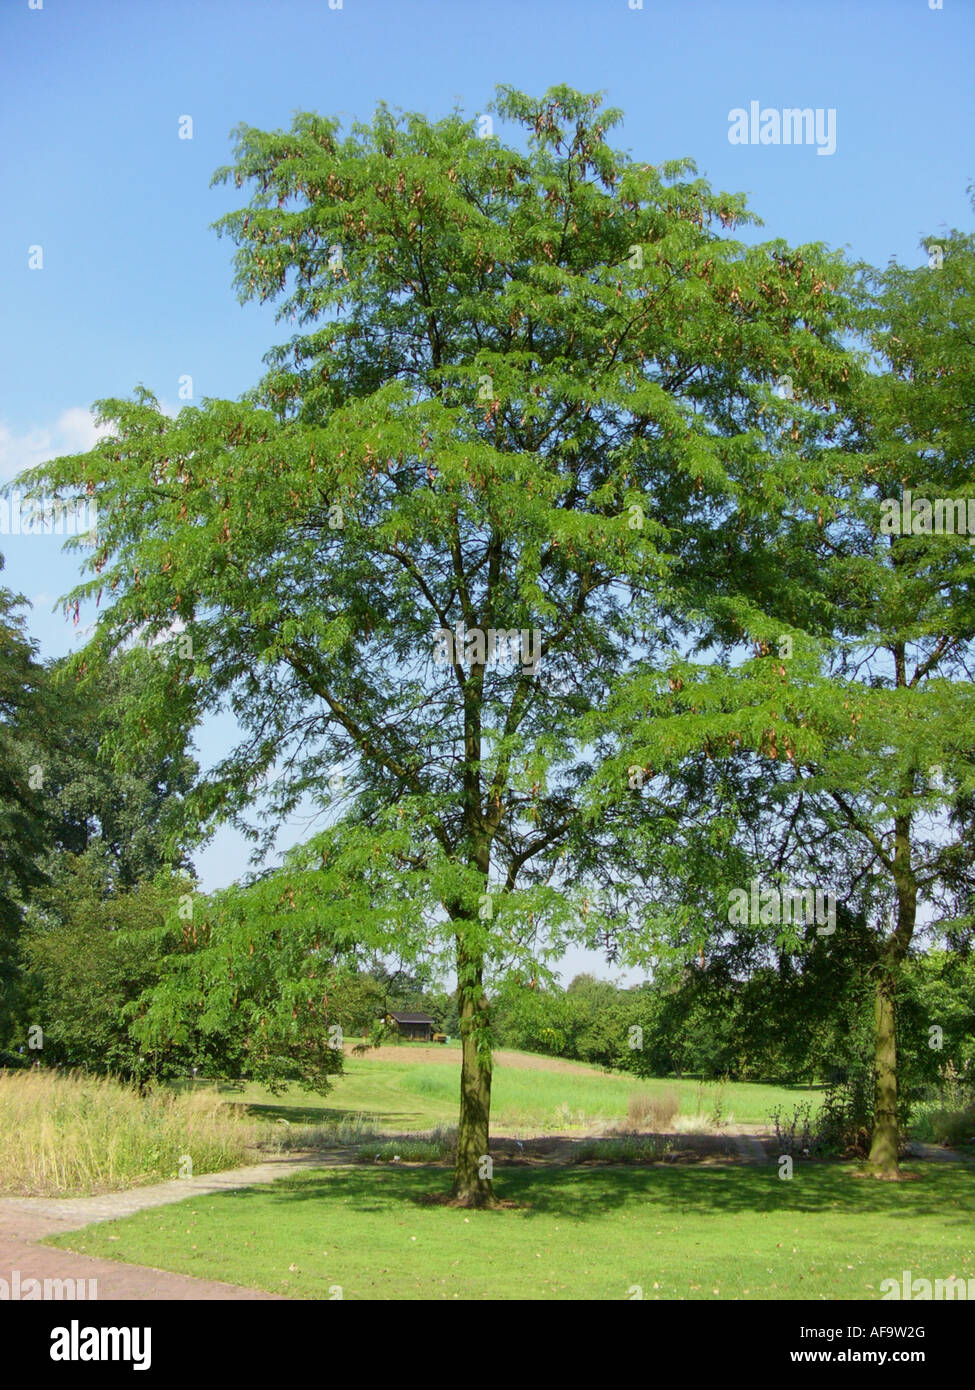 Thornless honeylocust (Gleditsia triacanthos var. inermis), single tree in a park Stock Photo